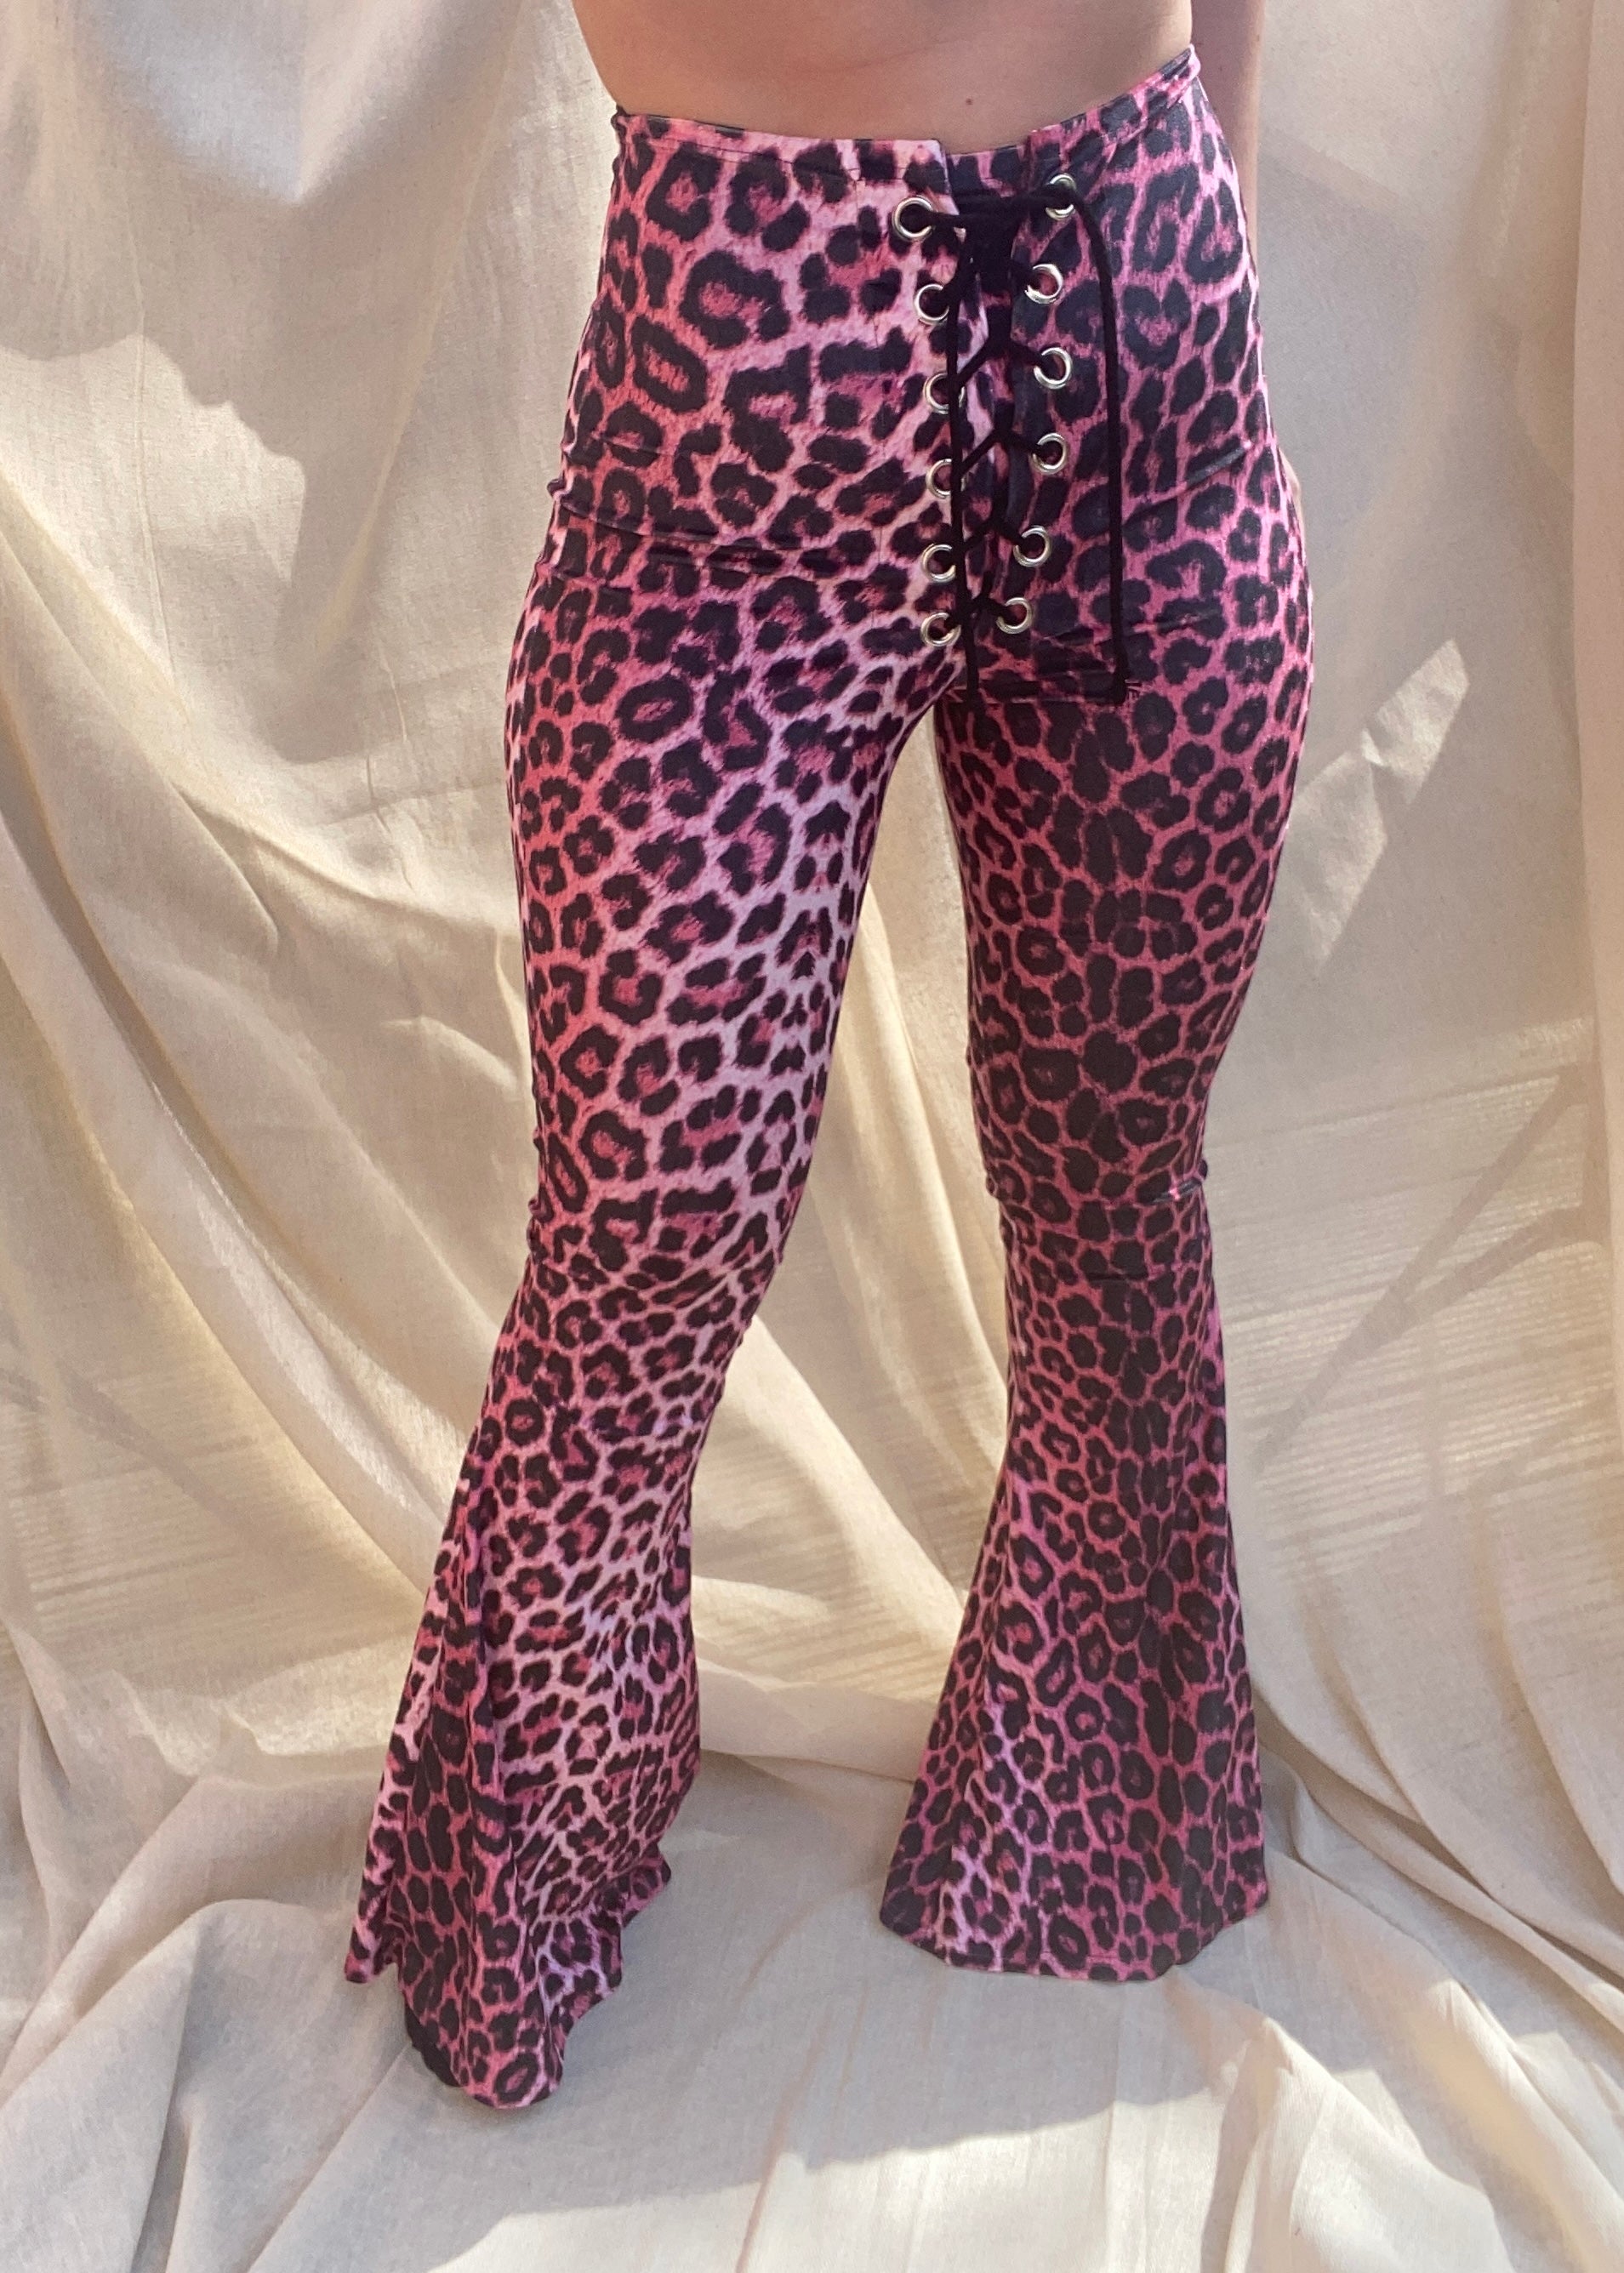 Leopard Print Pants in Black  Tom Ford  Mytheresa